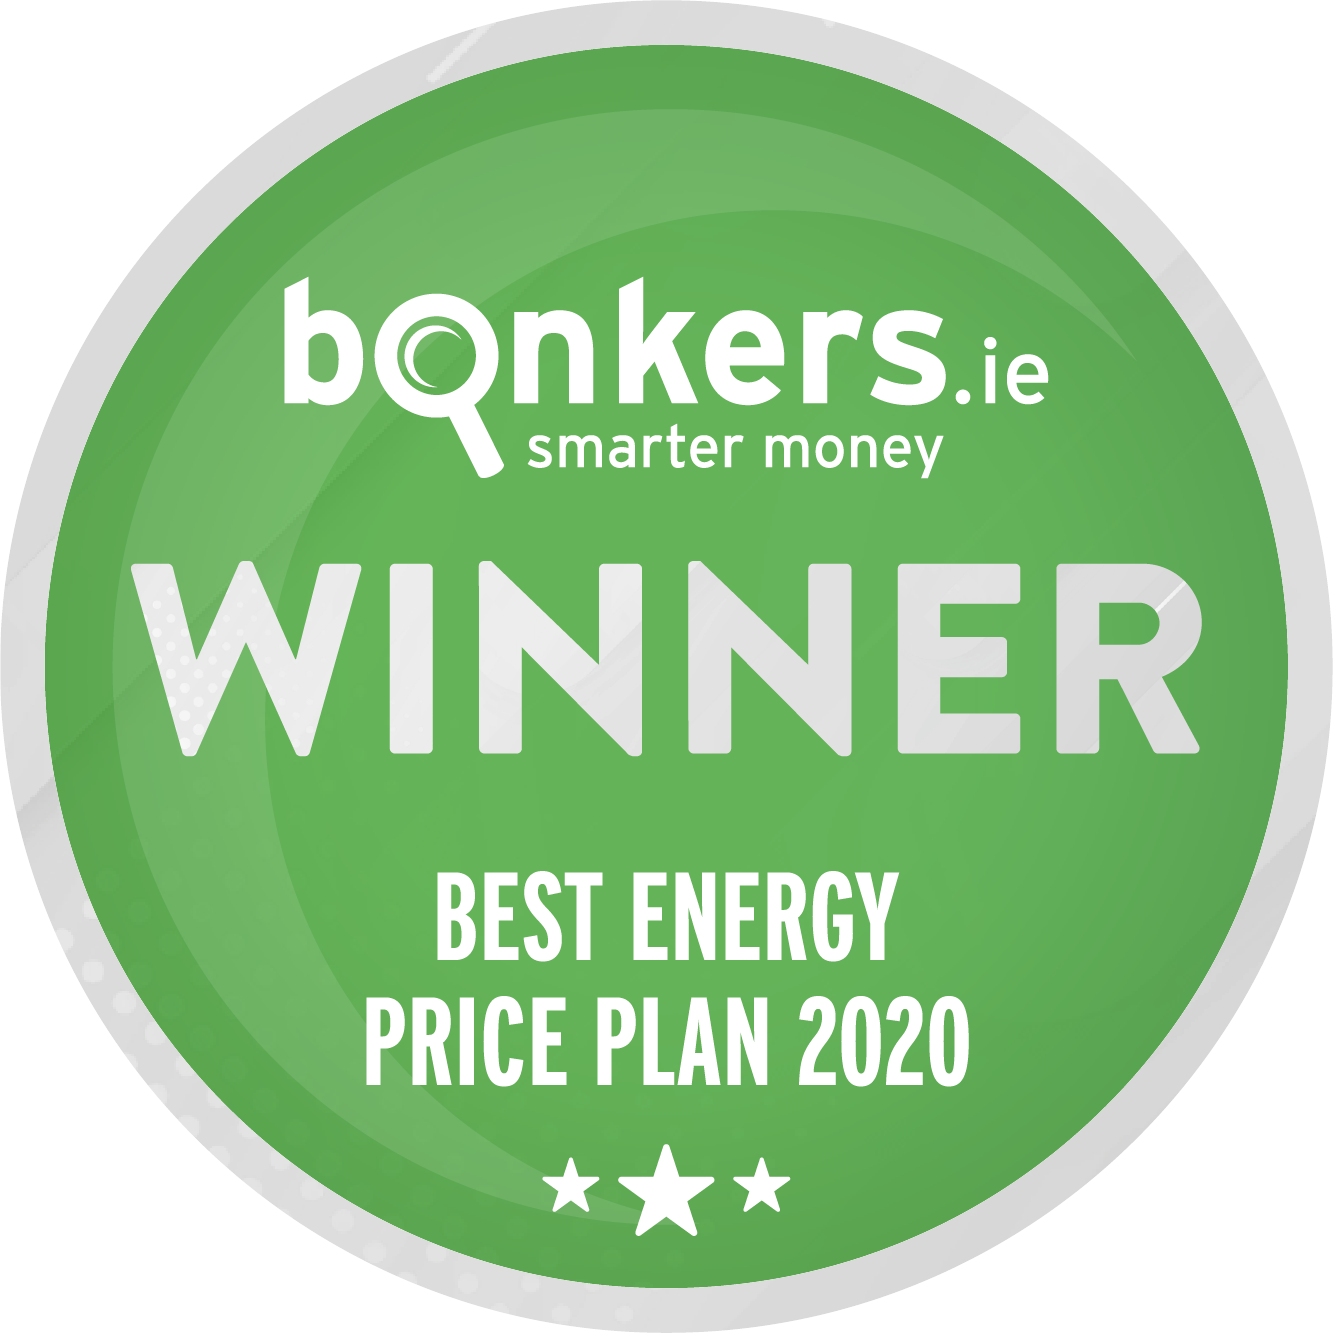 The bonkers.ie Awards 2020 Winners